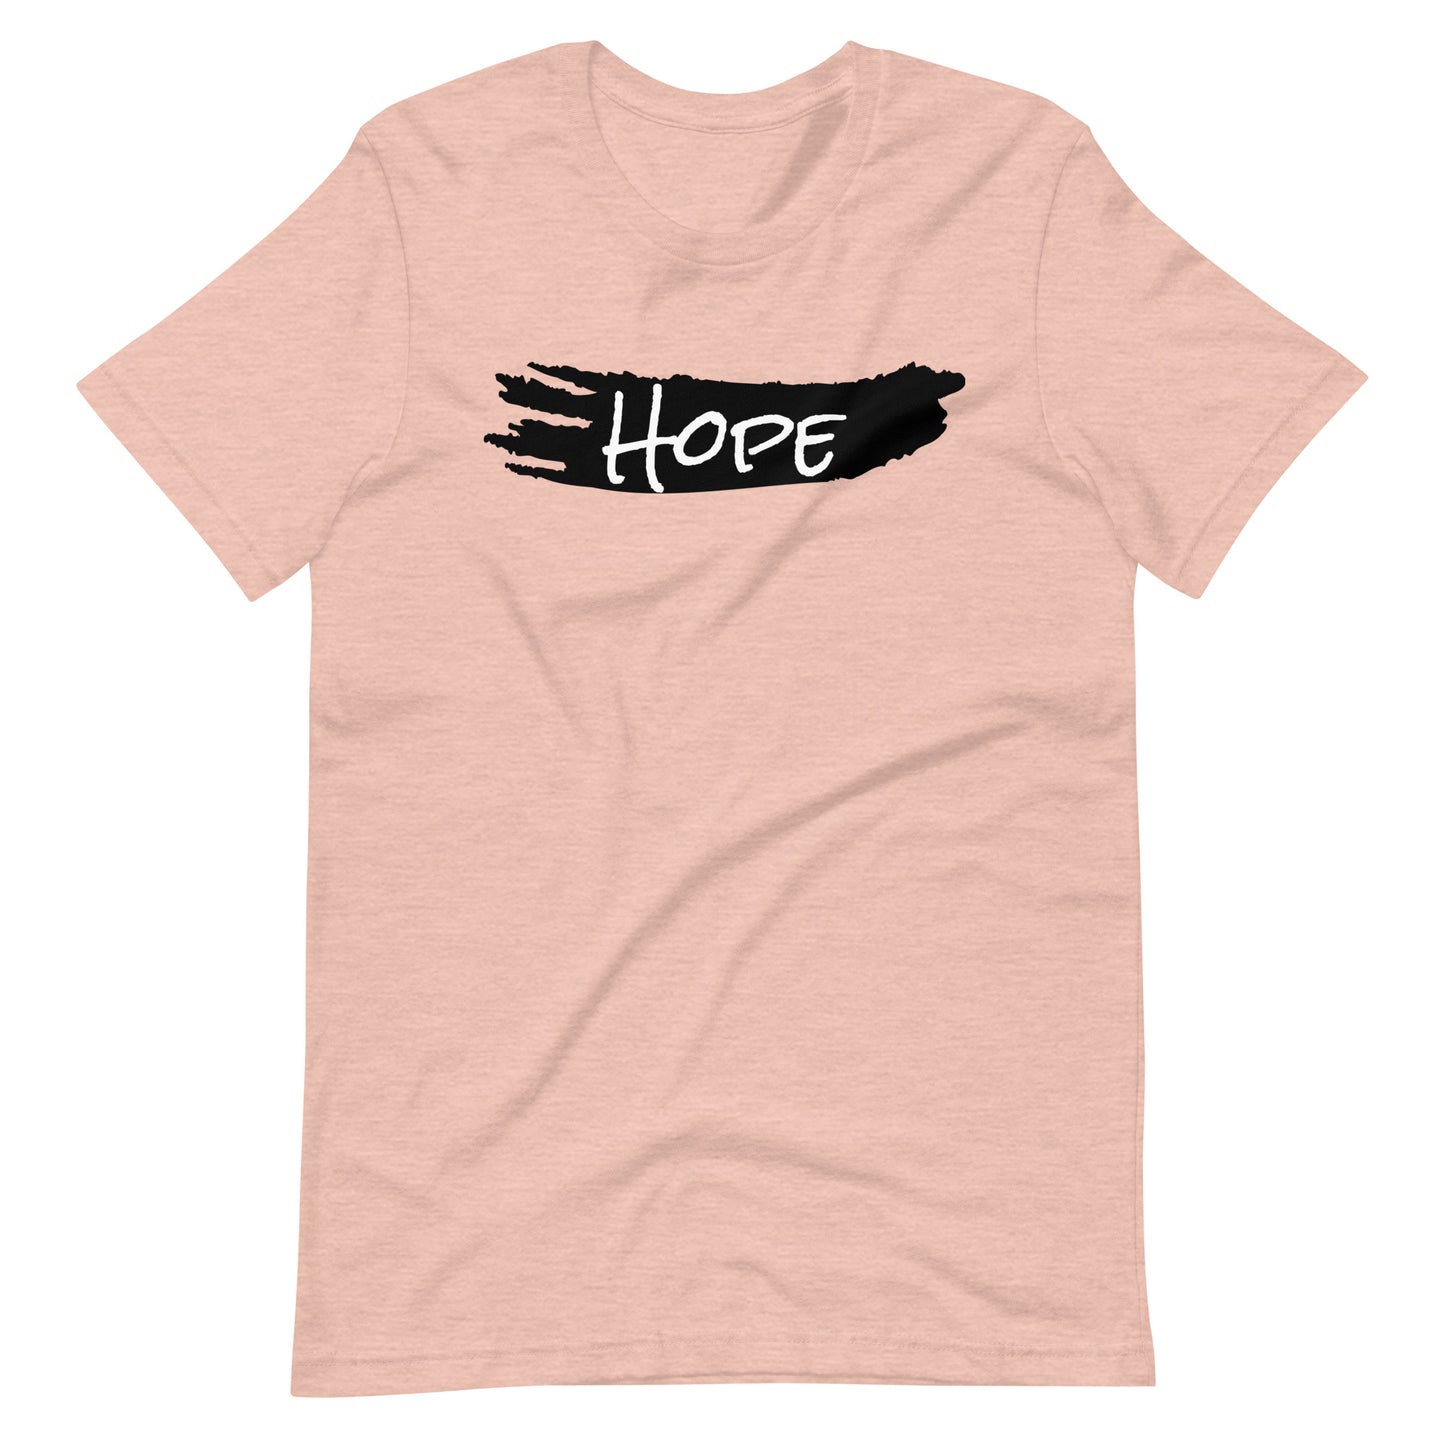 Inspirational “Hope” Shirt